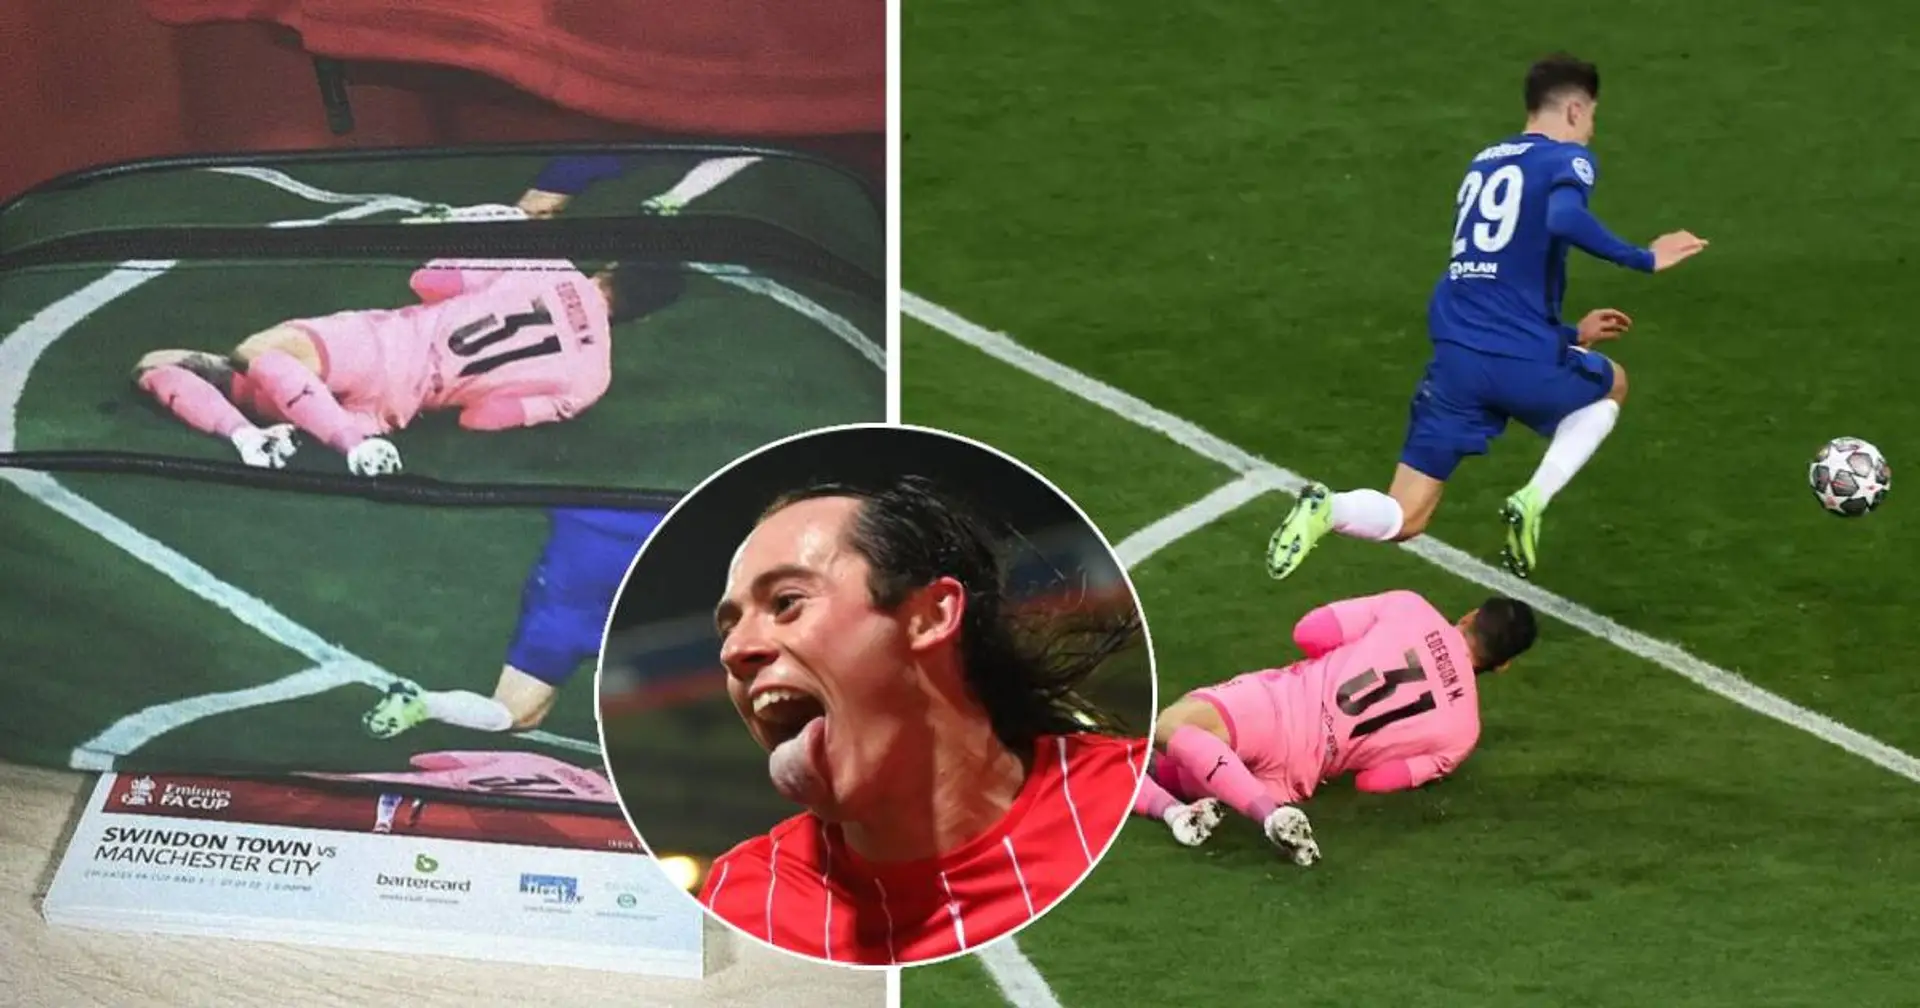 Swindon player trolls Man City by showing custom bag celebrating Chelsea's Champions League win